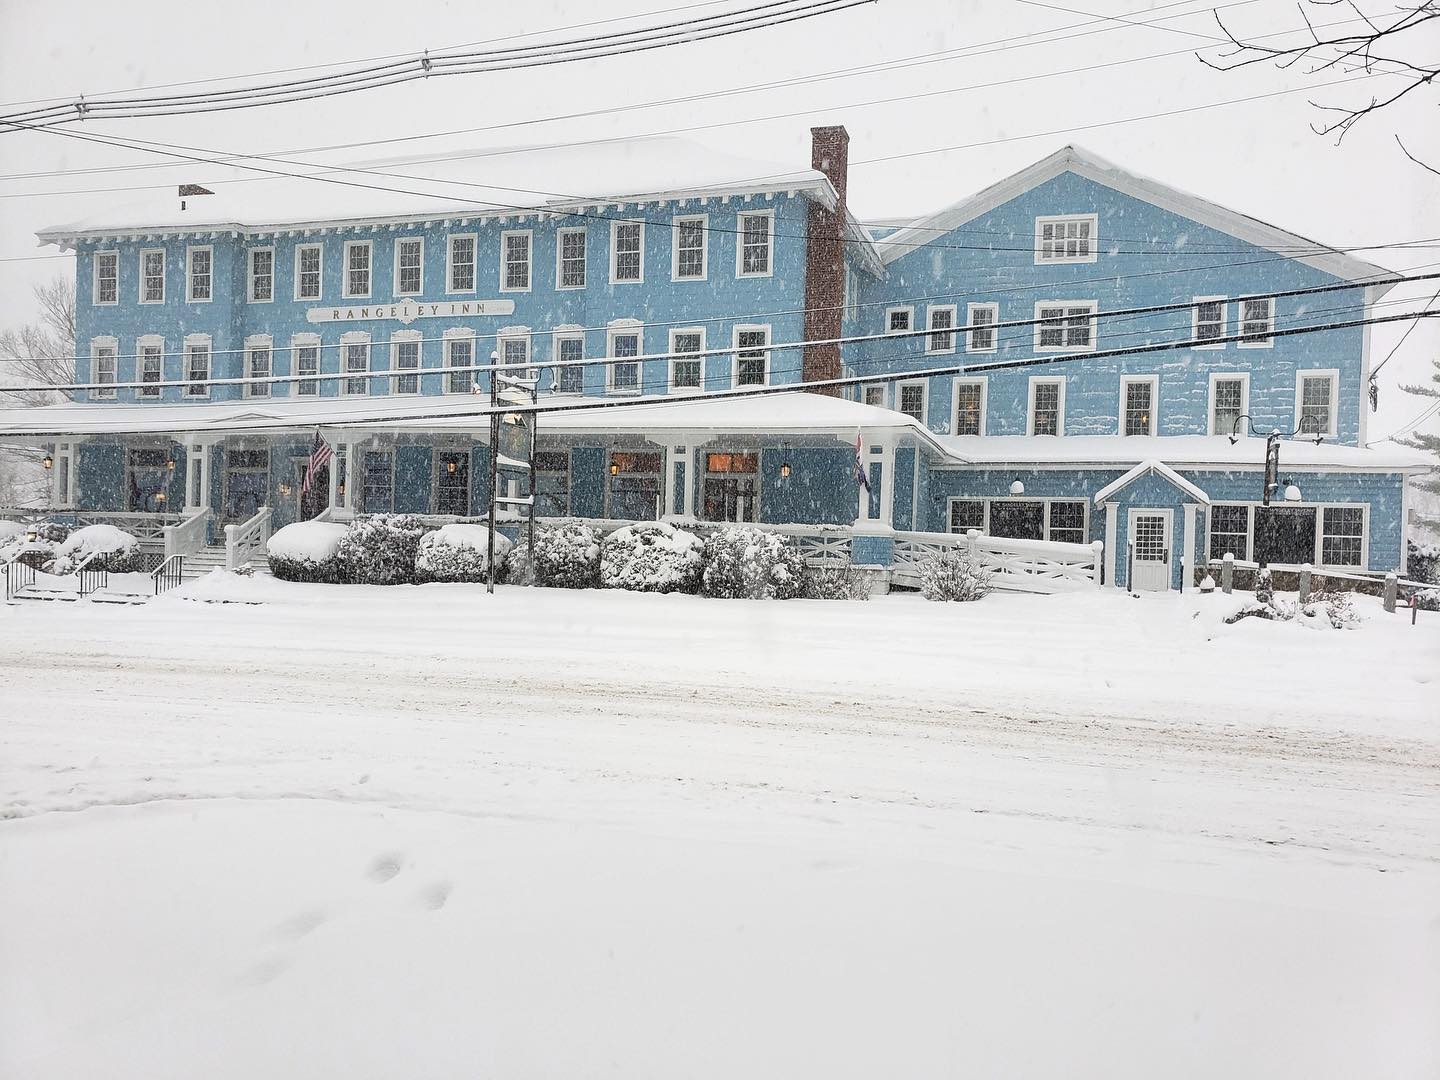 snow day at the Rangeley Inn